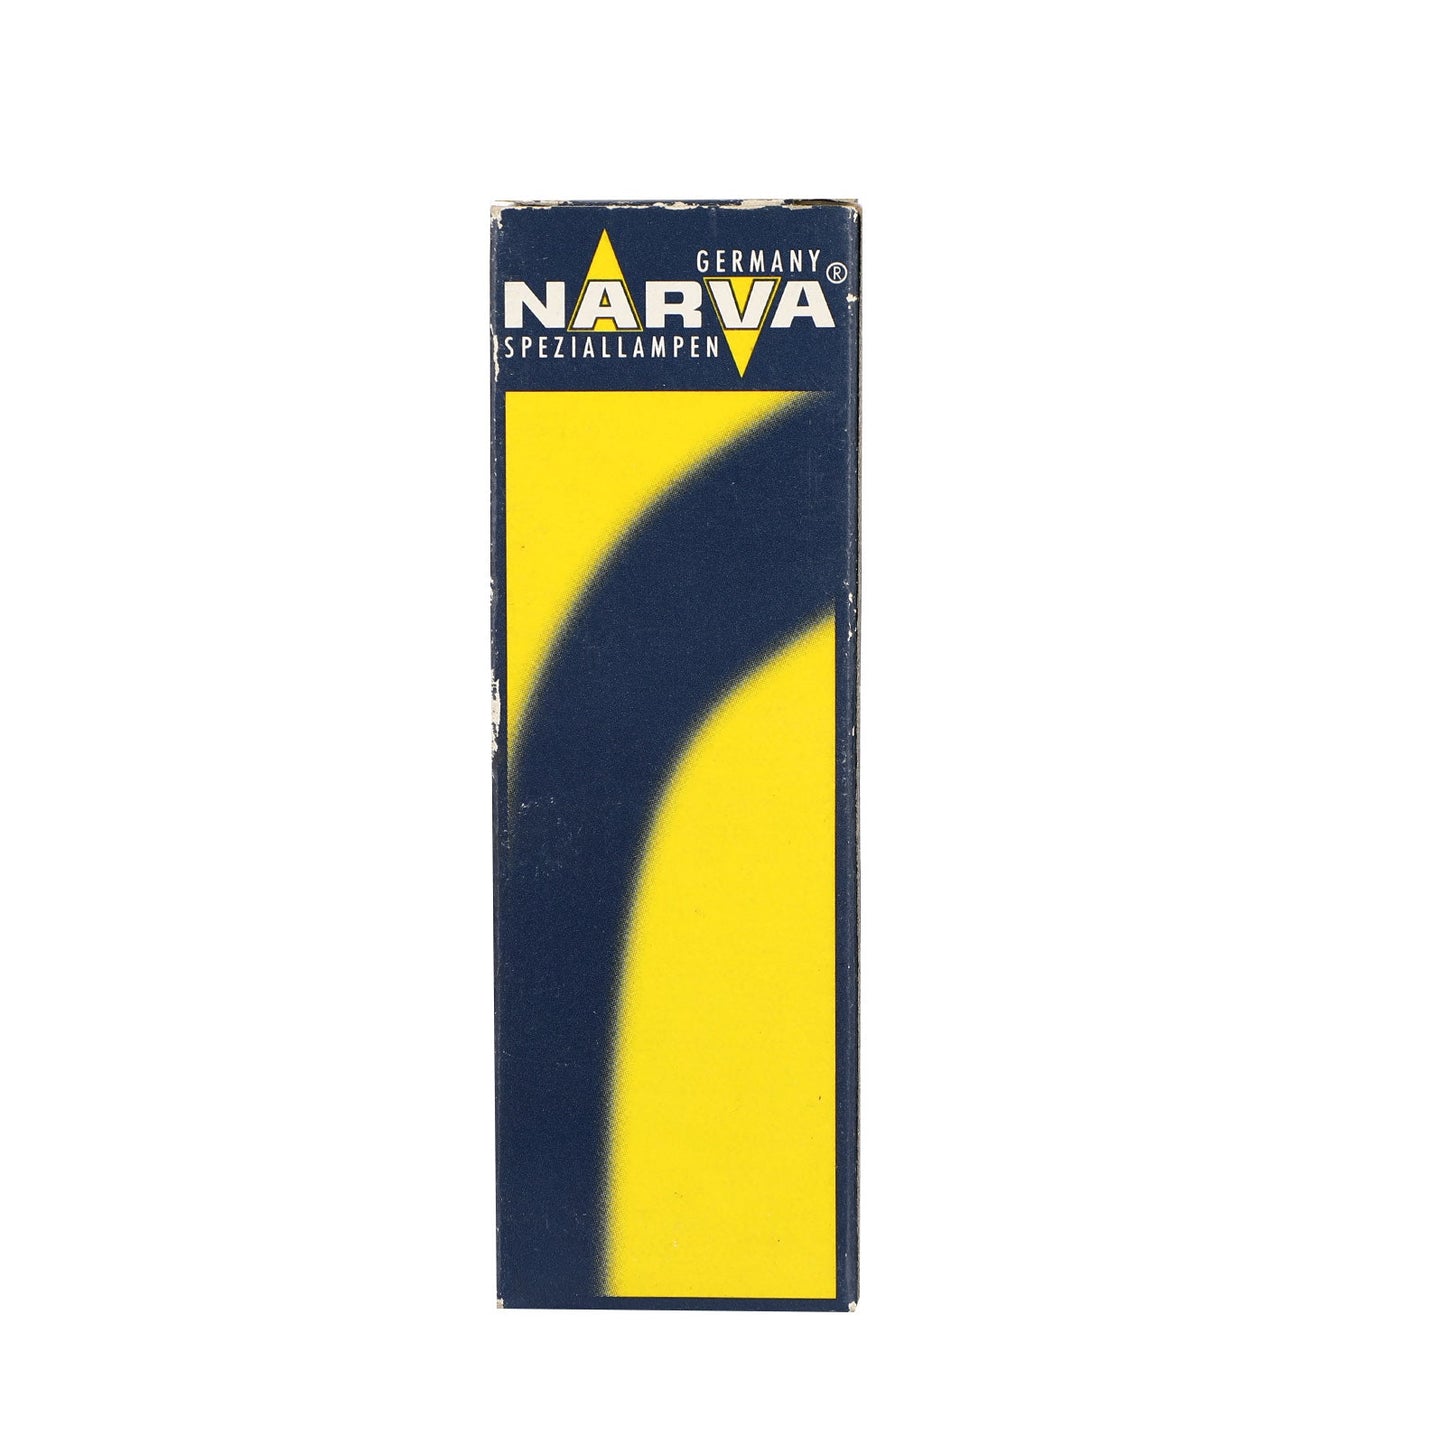 10x For NARVA 68191 Car Auxiliary Bulbs H21W 12V21W BAY9s